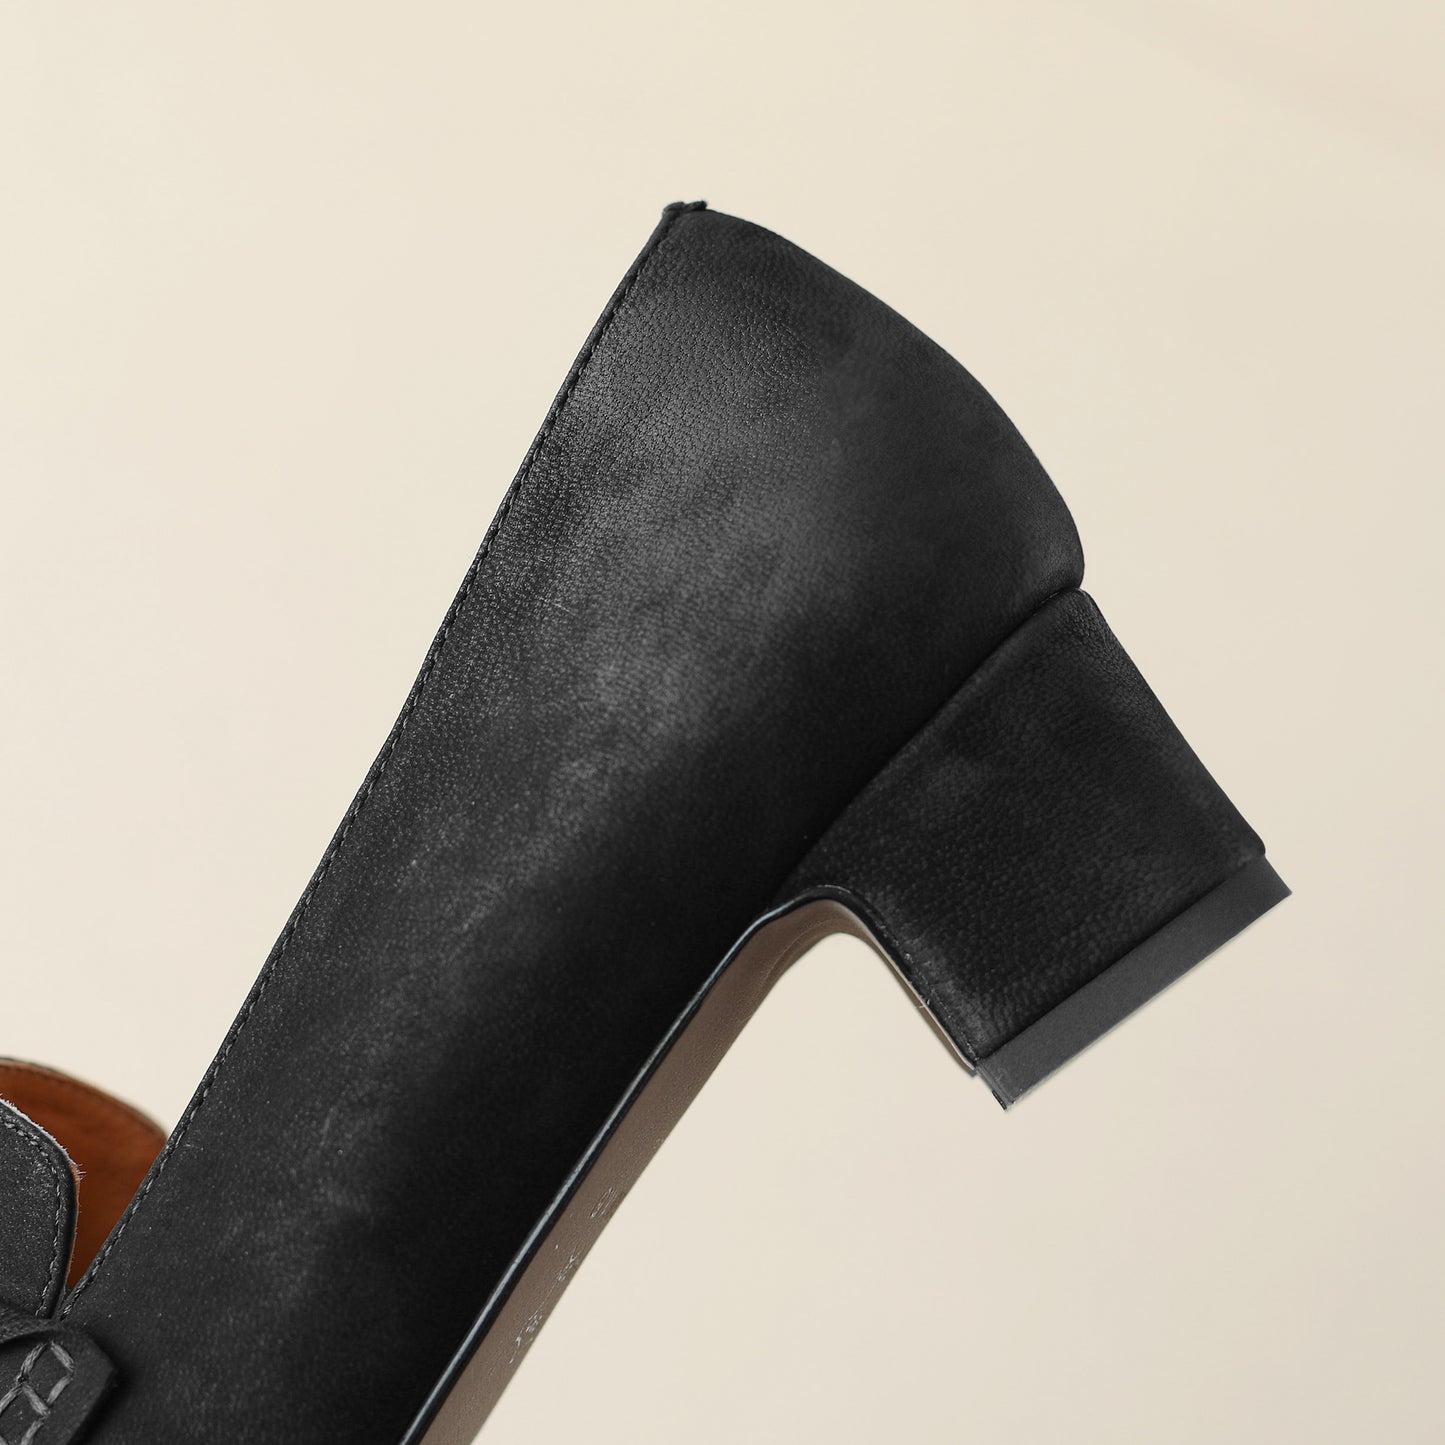 TinaCus Women's Handmade Genuine Leather Pointed Toe Block Heel Pumps Shoes